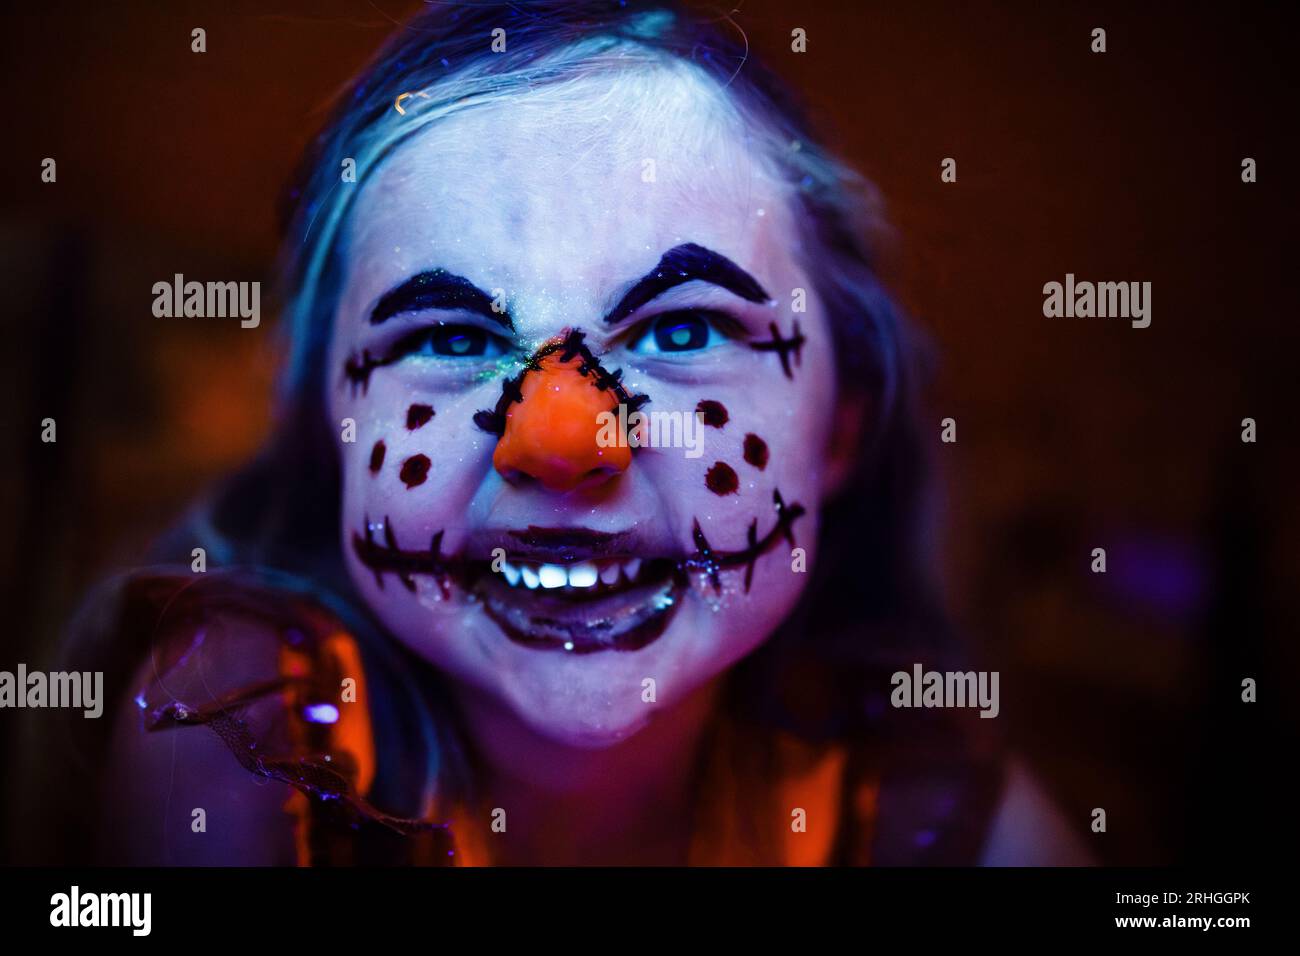 Kids Halloween scarecrow makeup face paint glowing in black light Stock Photo